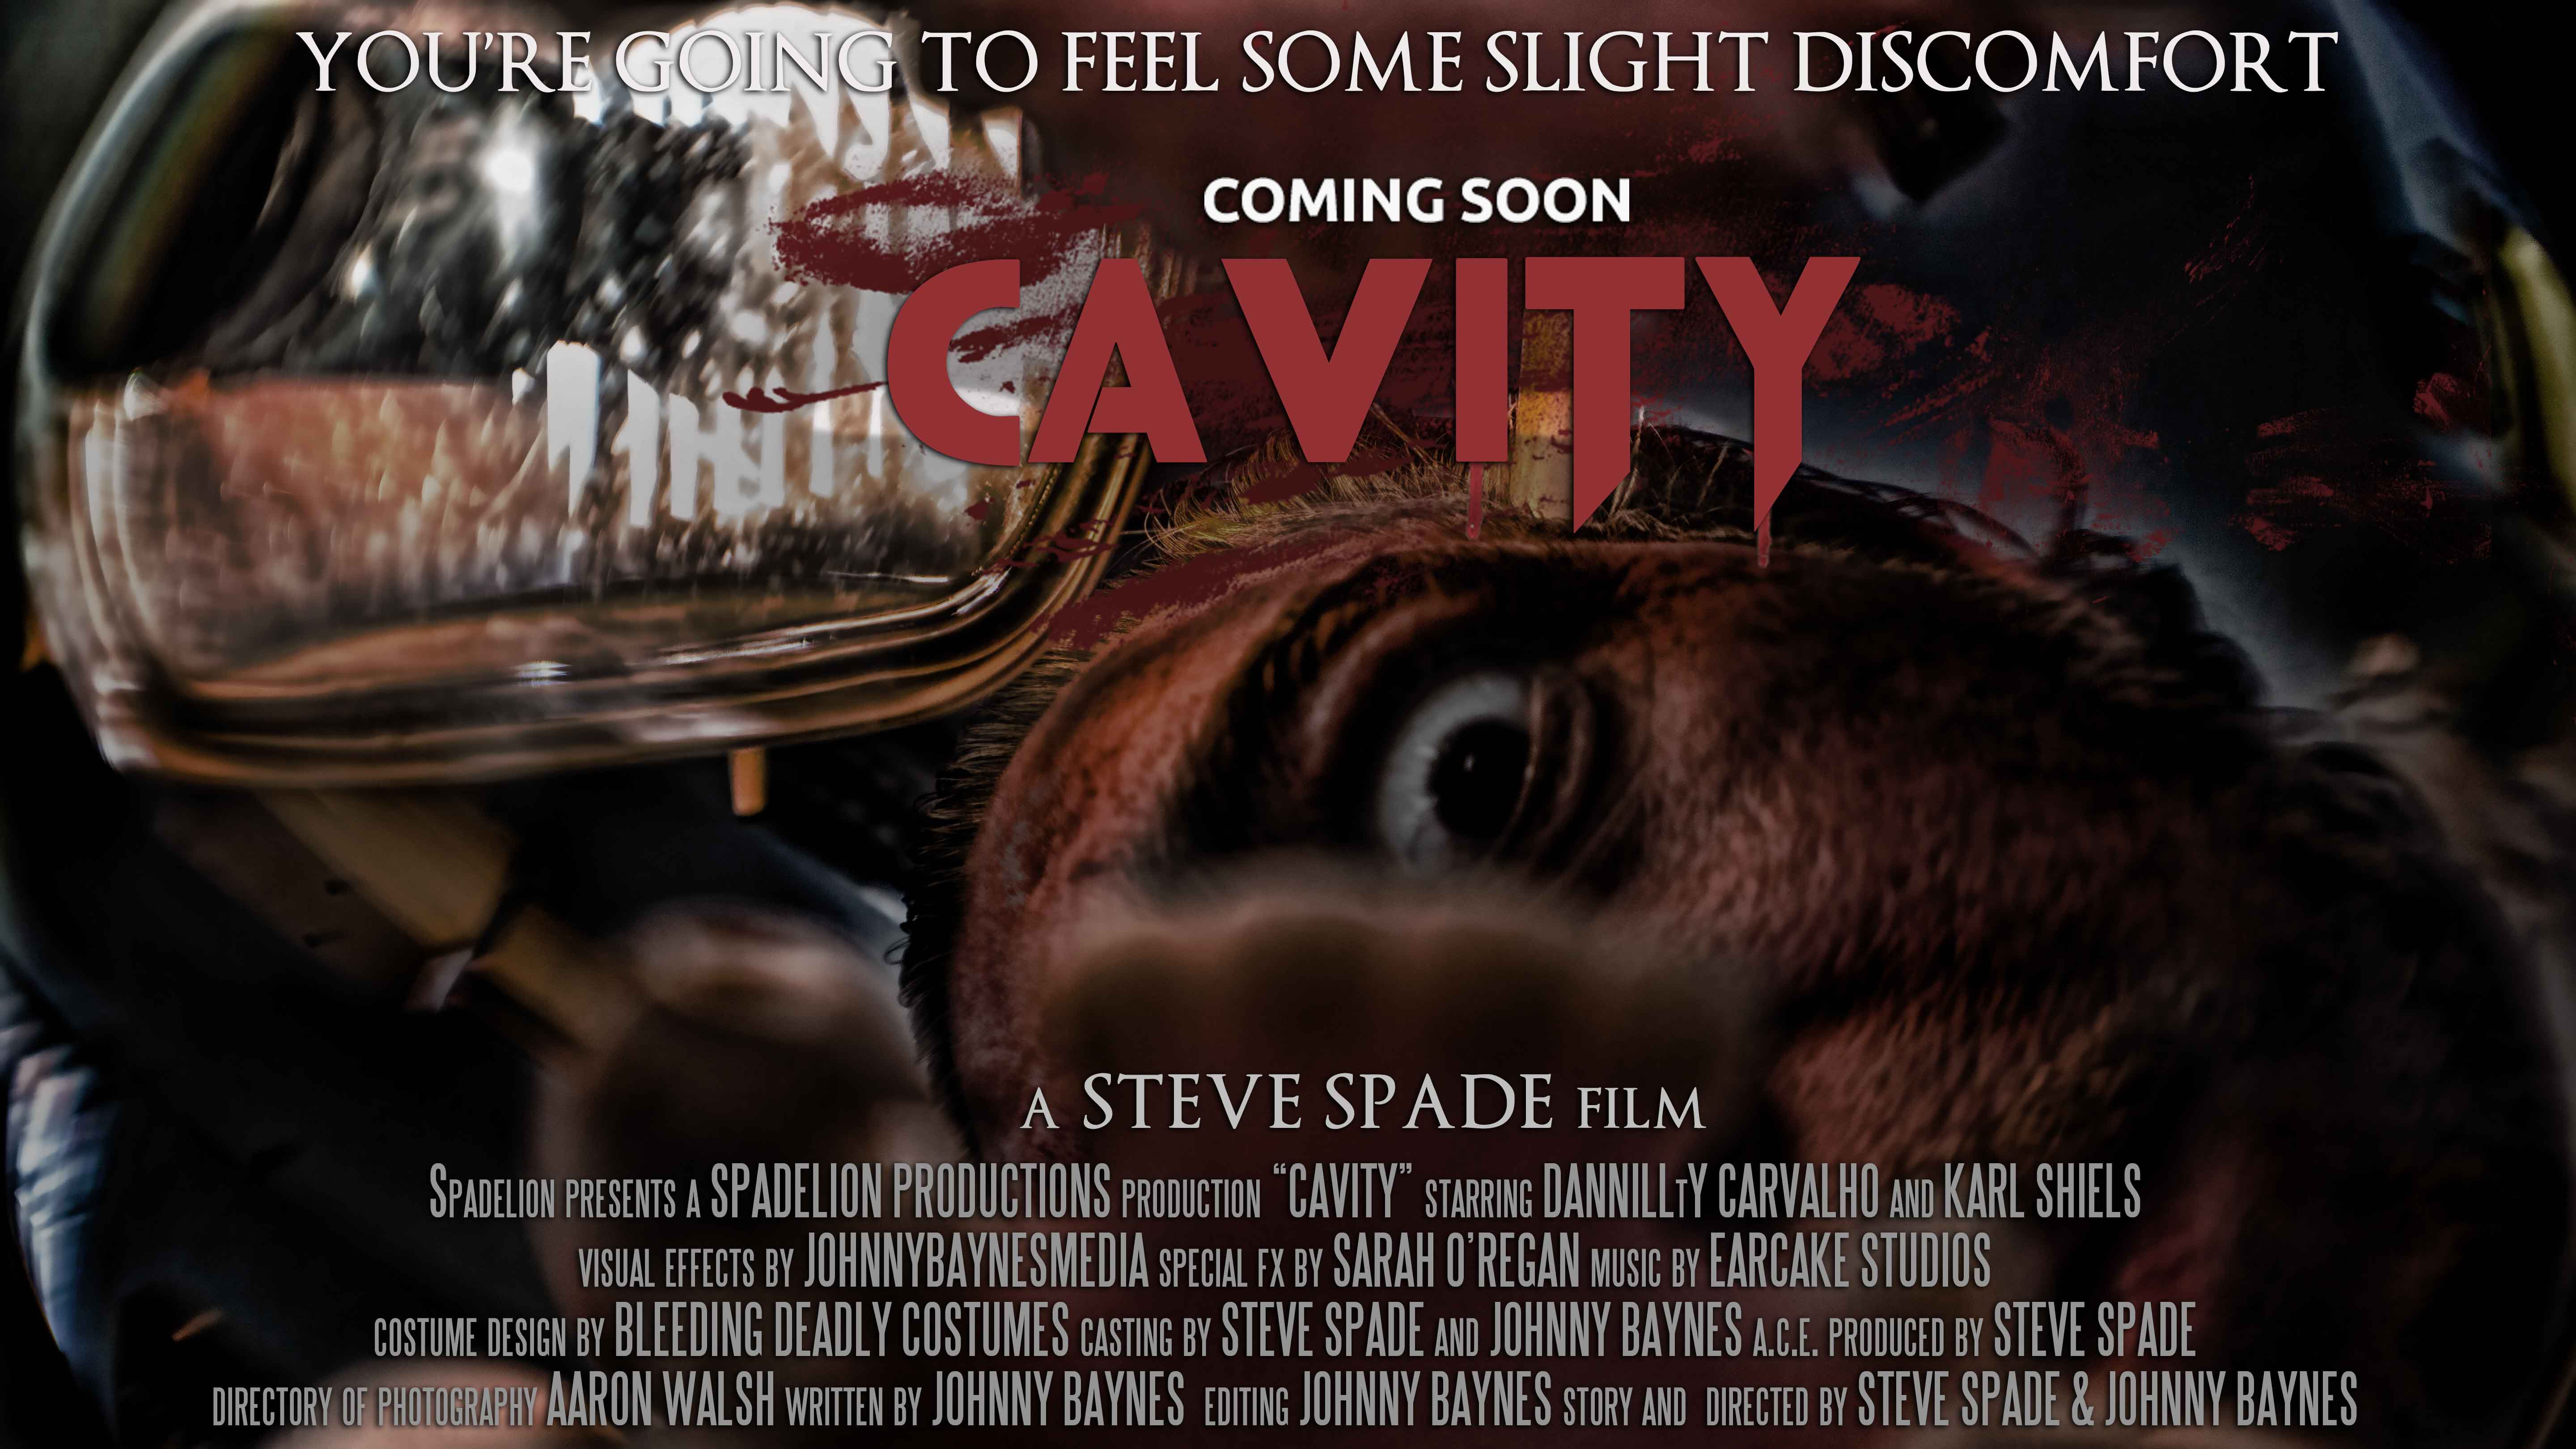 New movie Cavity on its way to Limerick soon